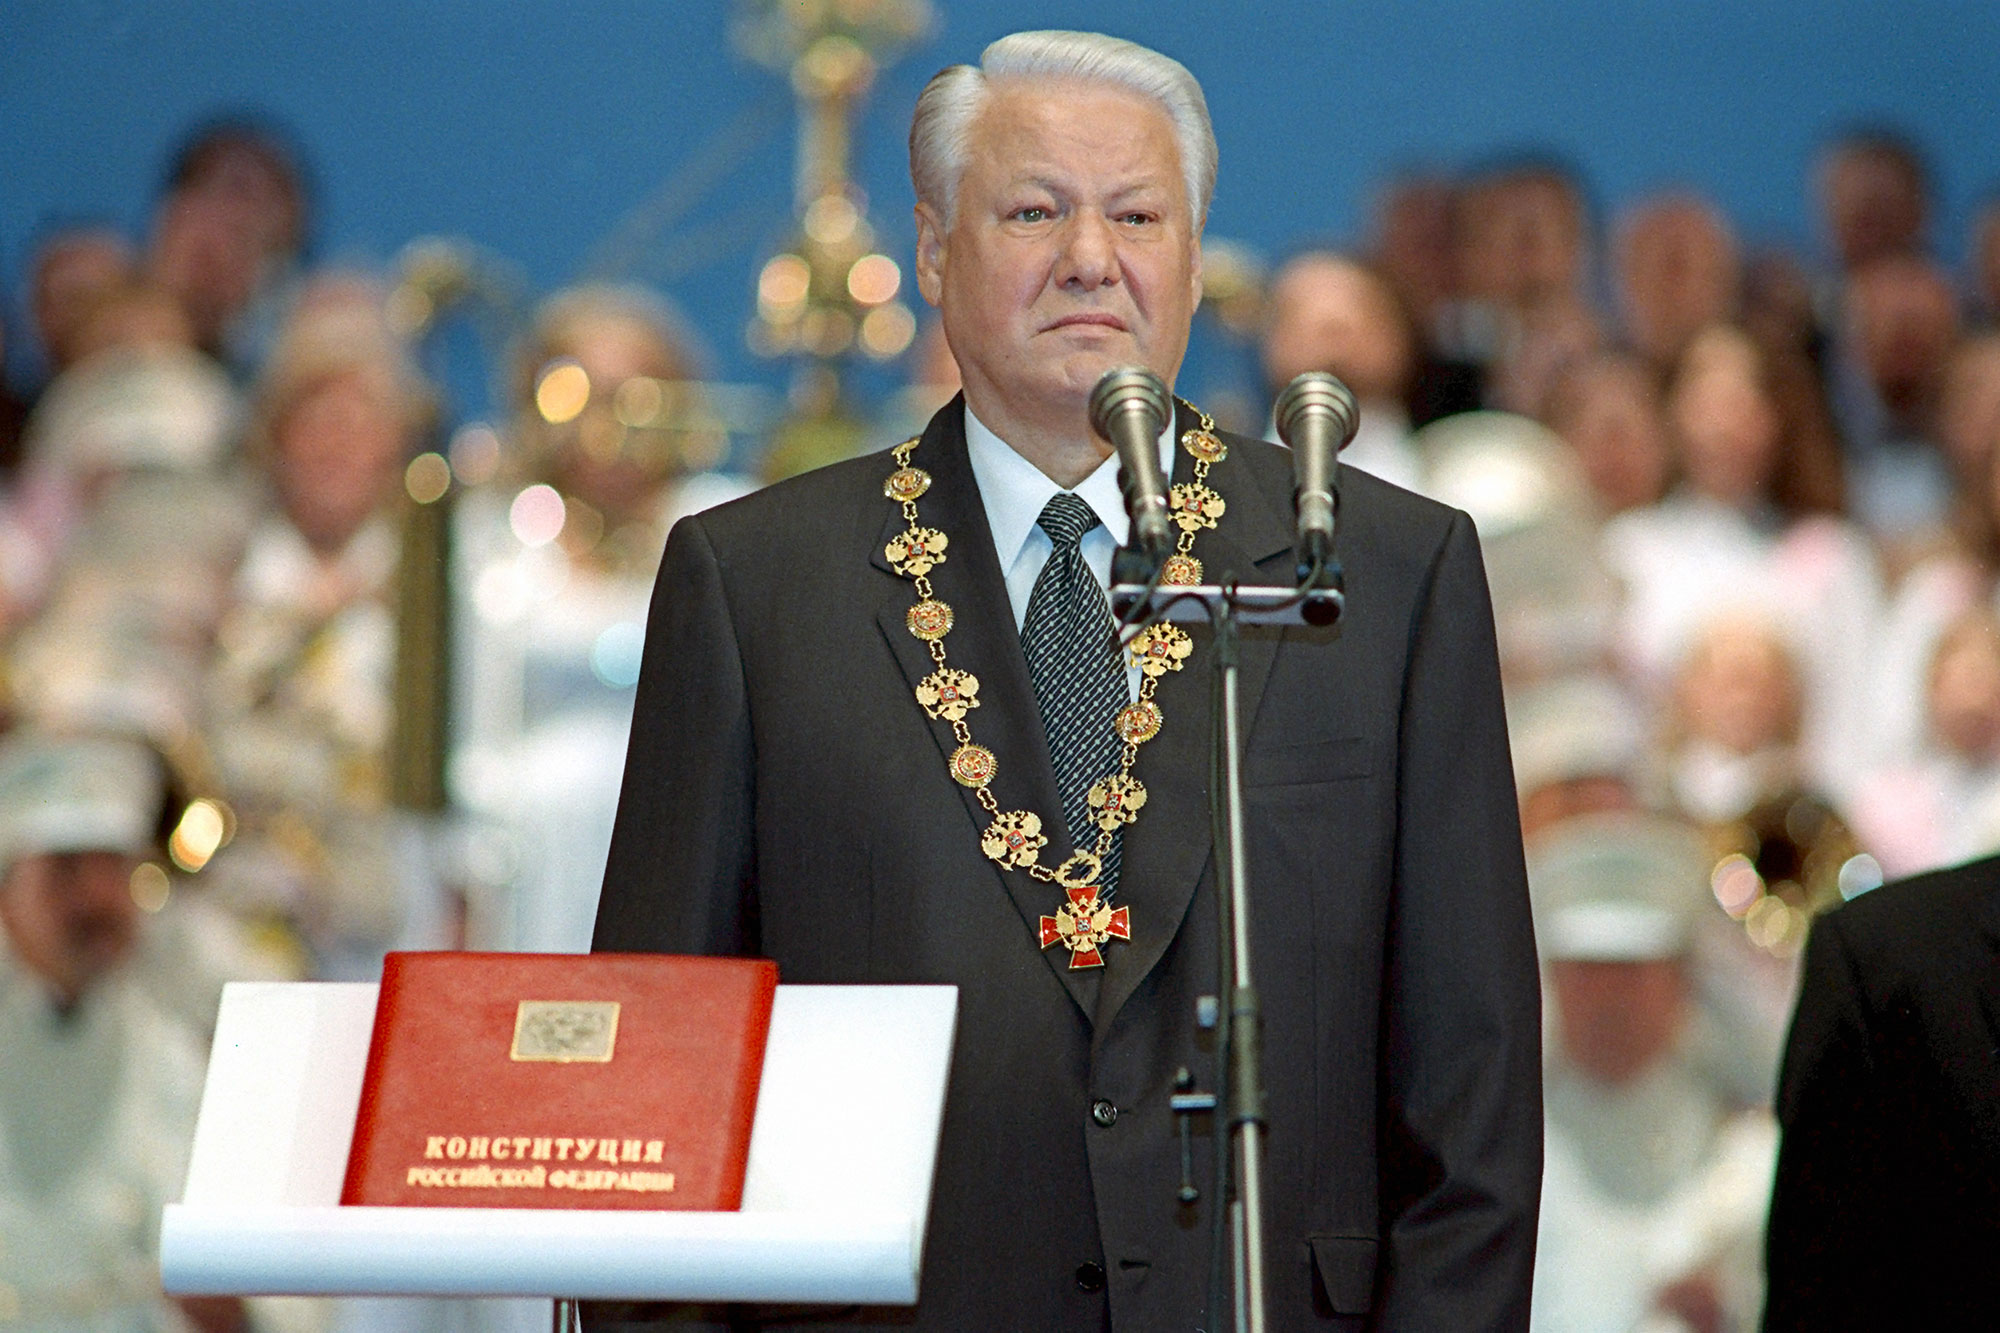 Избрание президентом россии б н ельцина. Инаугурация Ельцина 1996.